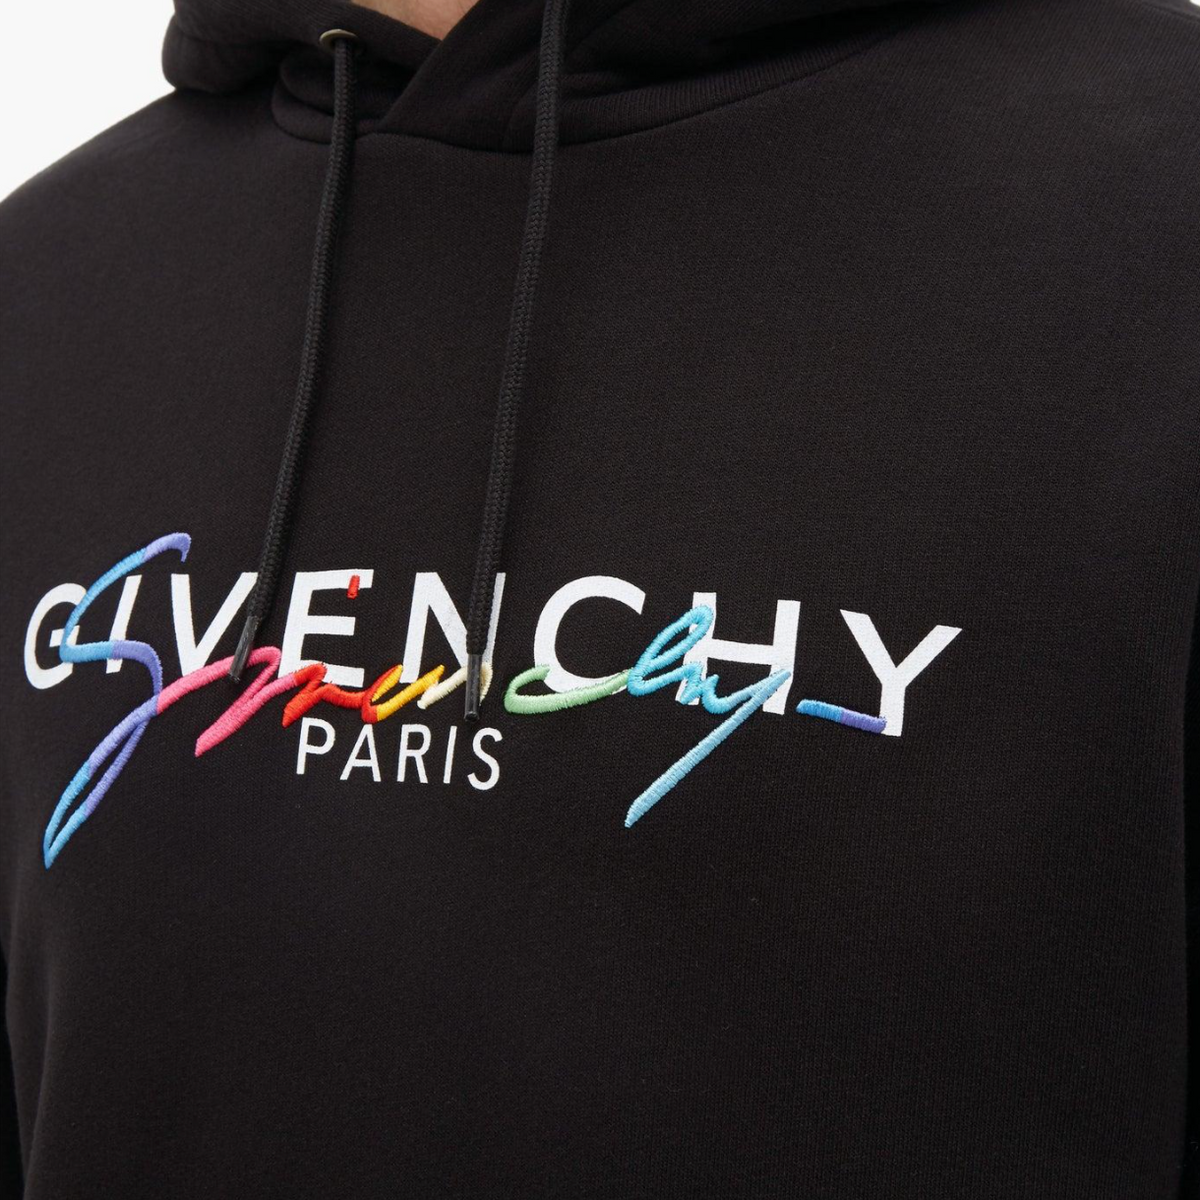 How To Spot Fake Givenchy Signature Sweatshirt – LegitGrails